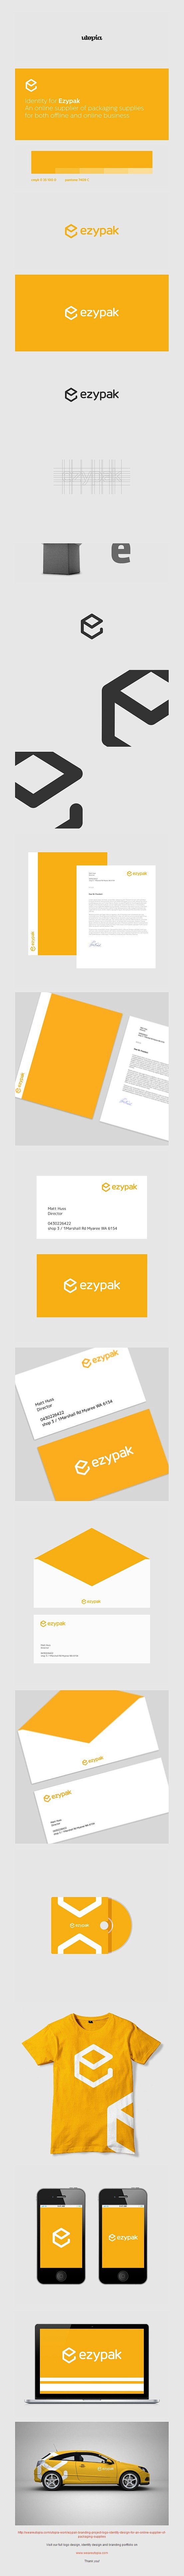 Ezypak logo and corp...